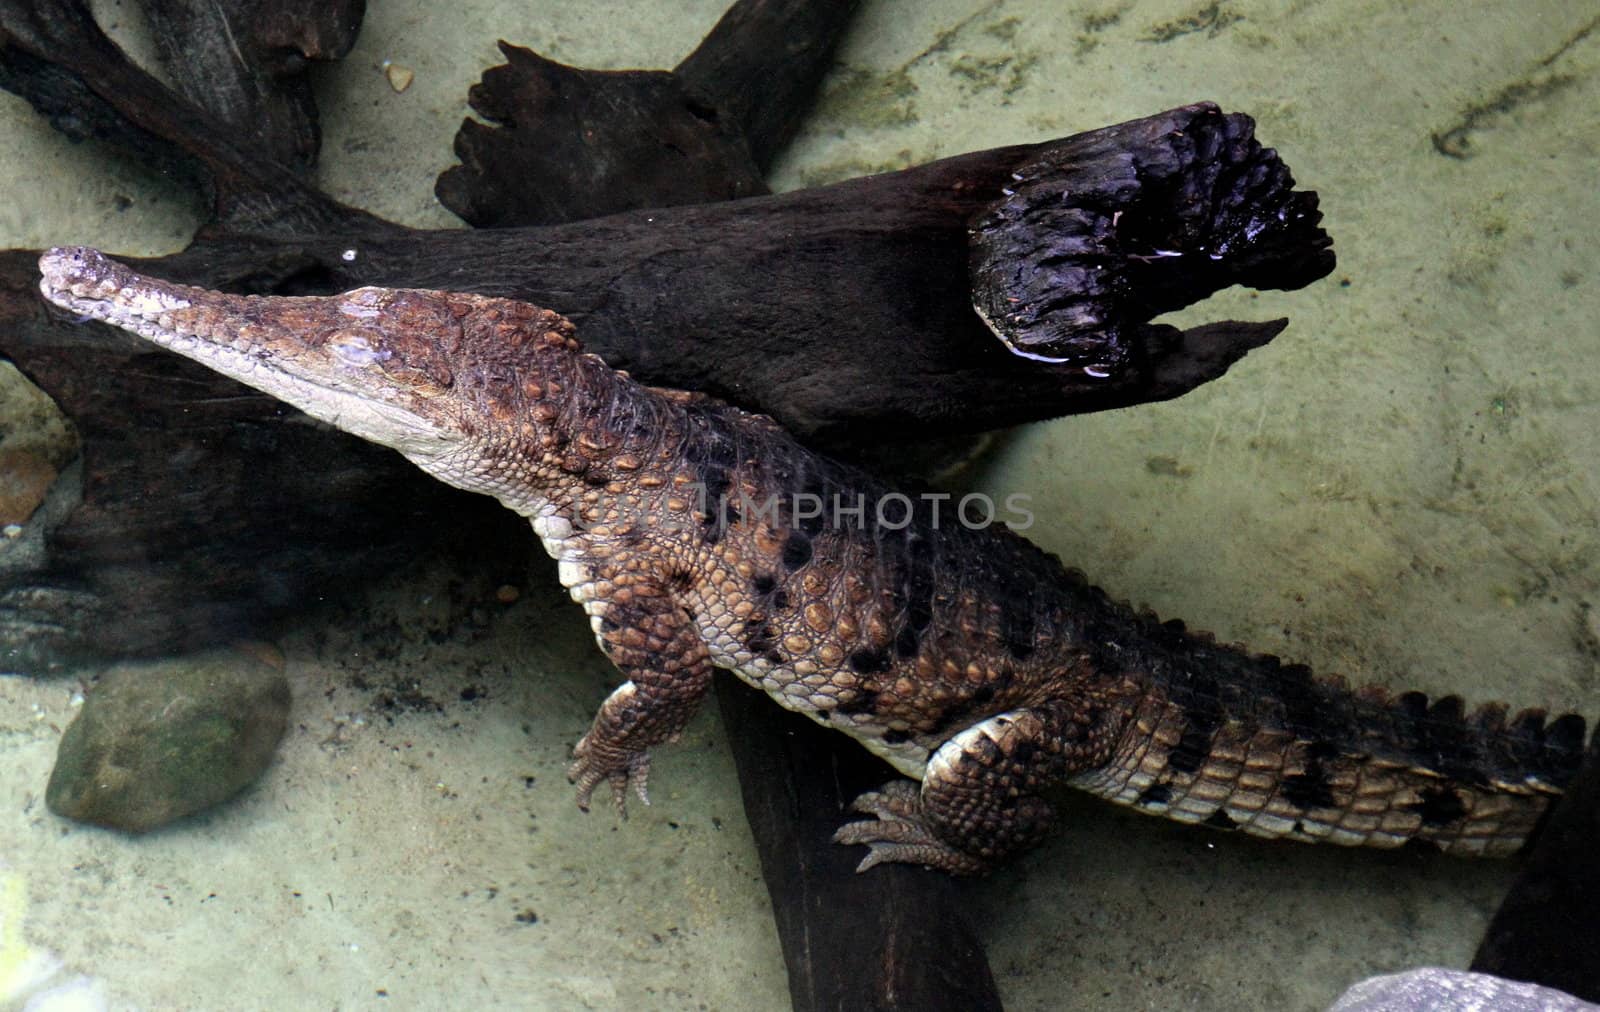 Australain Freshwater Crocodile by KirbyWalkerPhotos